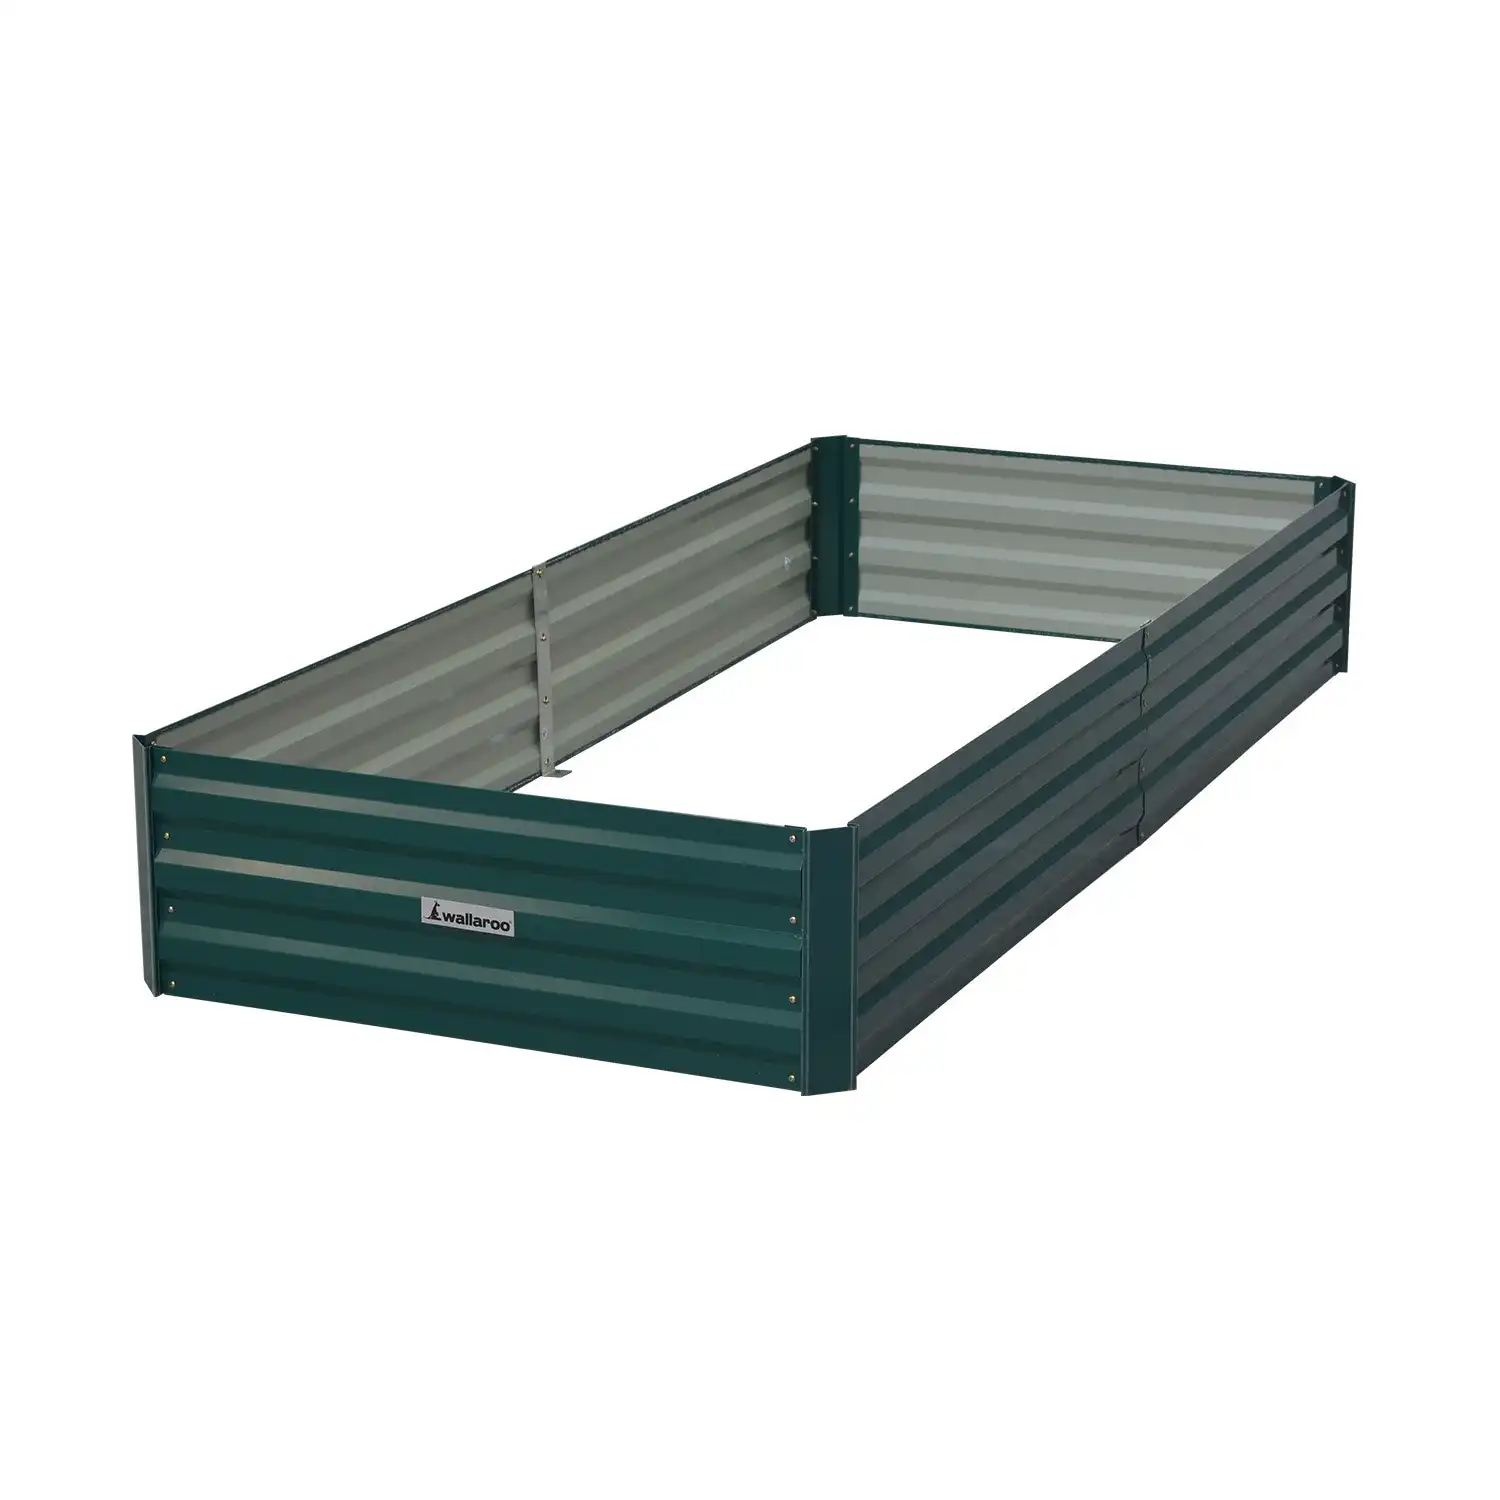 Wallaroo 210 x 90 x 30cm Galvanized Steel Garden Bed - Green